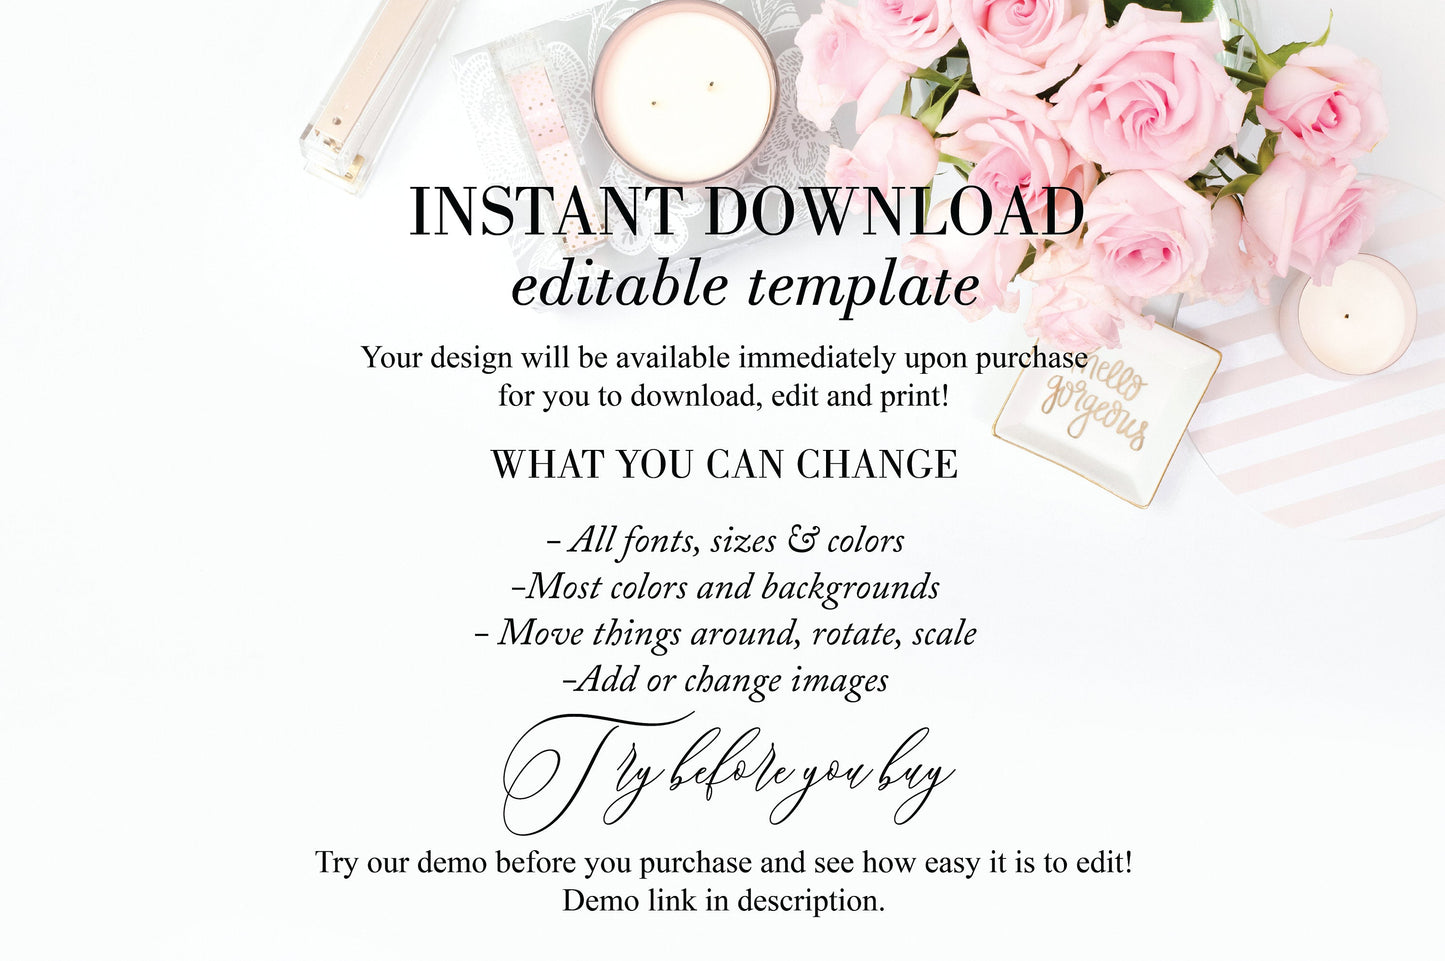 Printable Wedding Invitation Set Editable Template, DIY Instant Download Invites, Invitation Suite, 100% Editable- Gab WEDDING INVITATIONS SAVVY PAPER CO